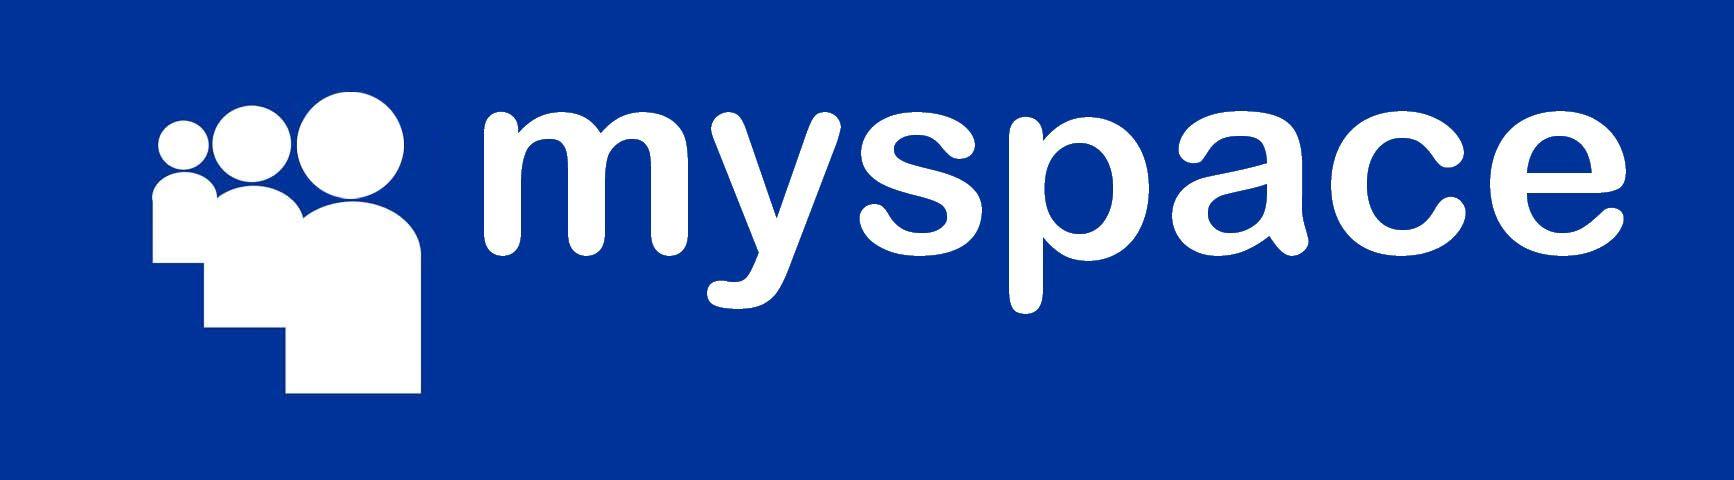 New Myspace Logo - Myspace Logos